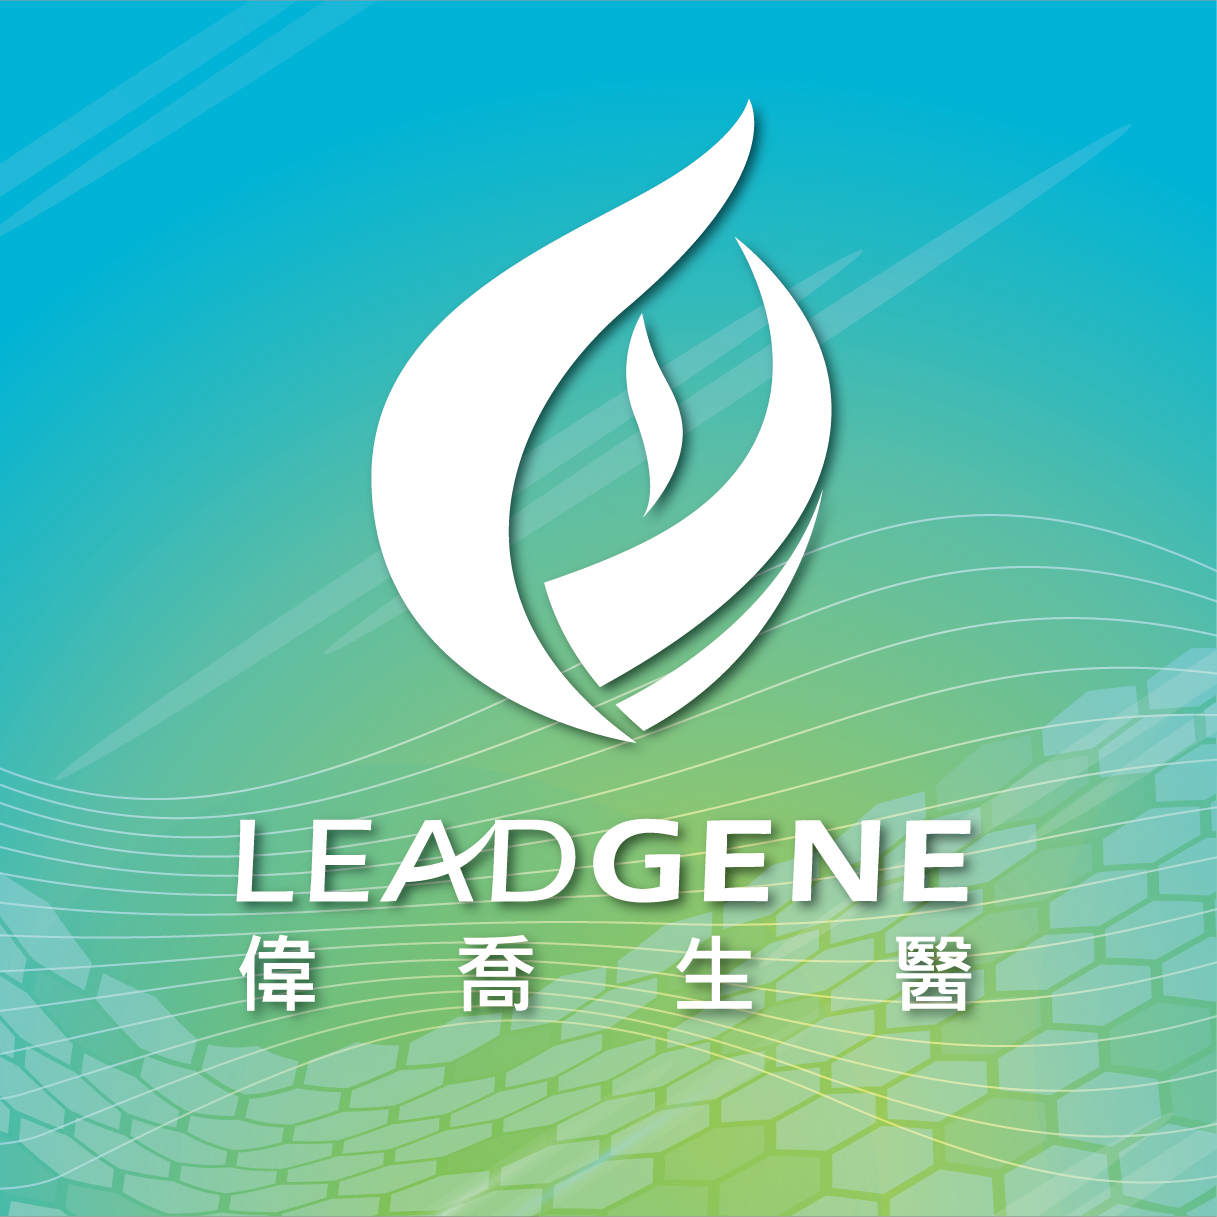 Leadgene Biomedical Inc